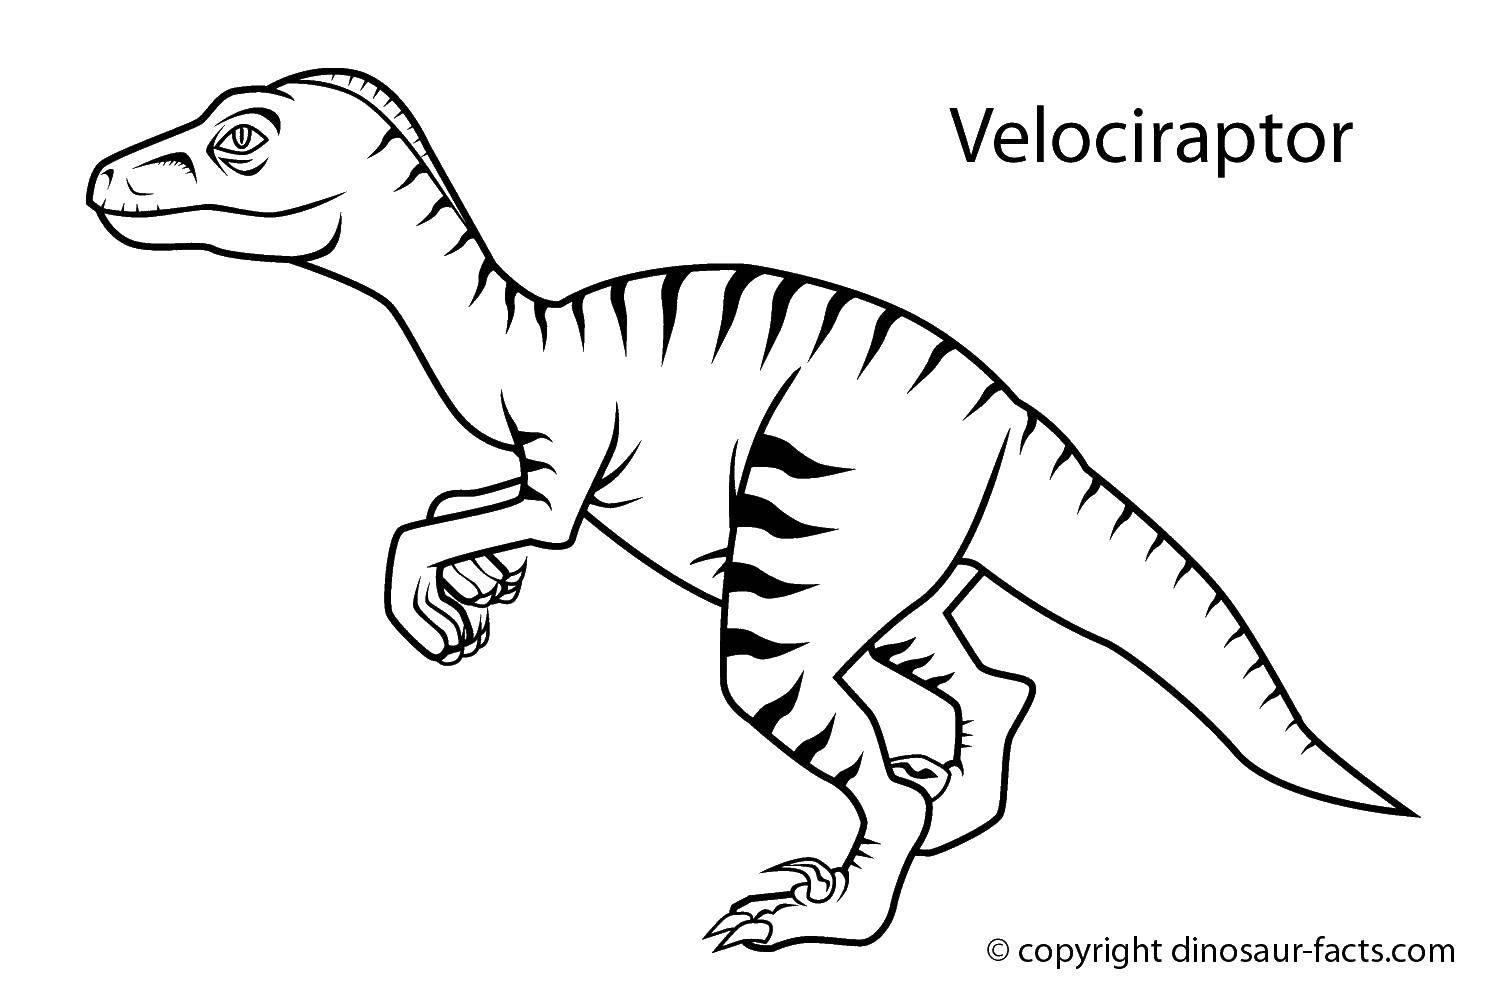 Coloring VelociRaptor. Category Jurassic Park. Tags:  dinosaurs , VelociRaptor.